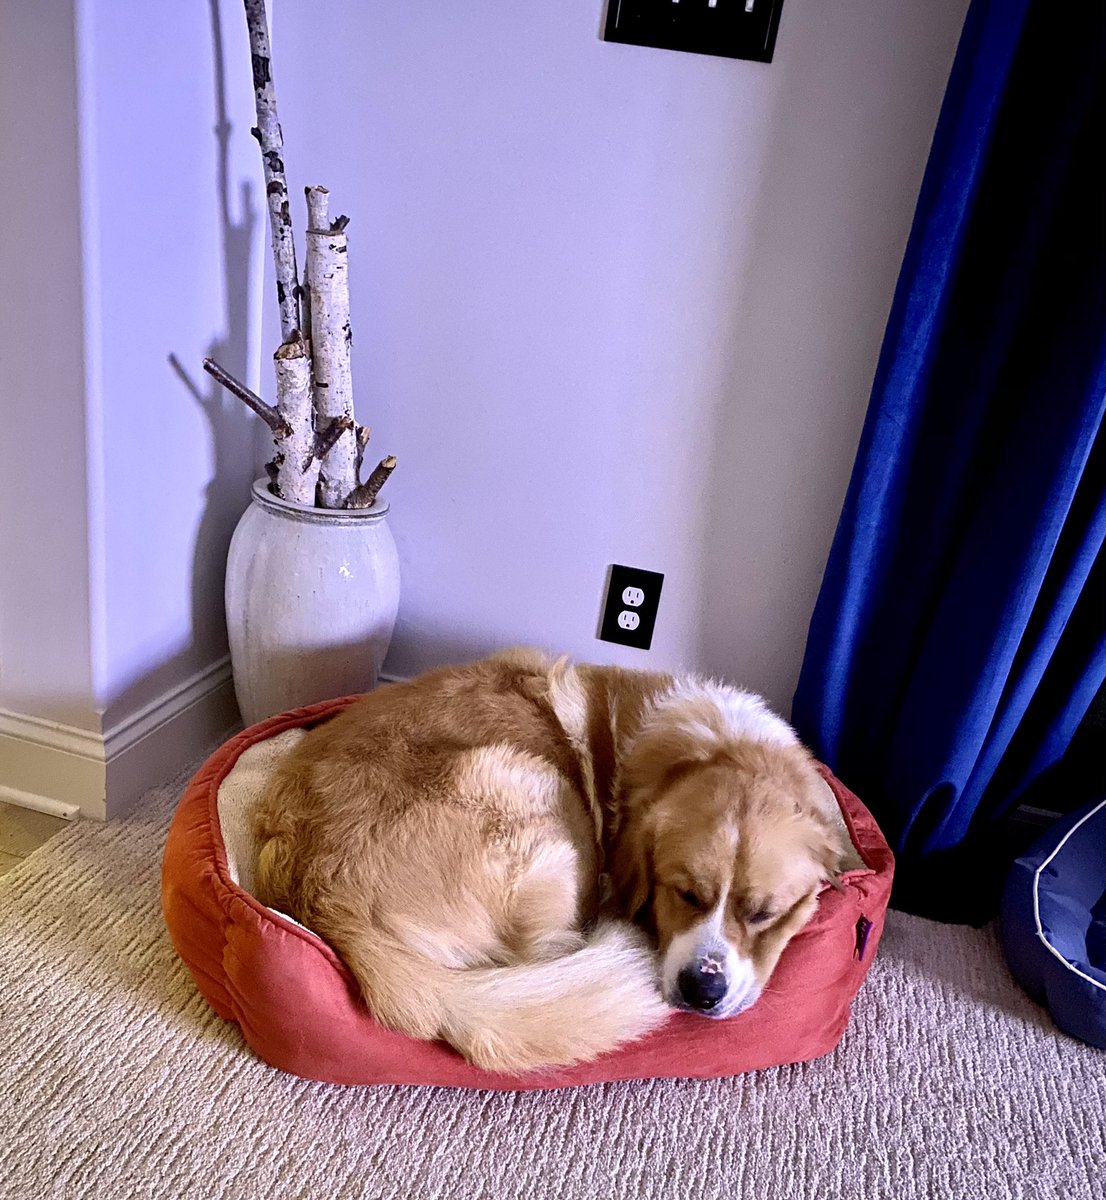 Big dog in a little bed....big dog in a little bed. 
#greatbernese
#bernesemountaindog